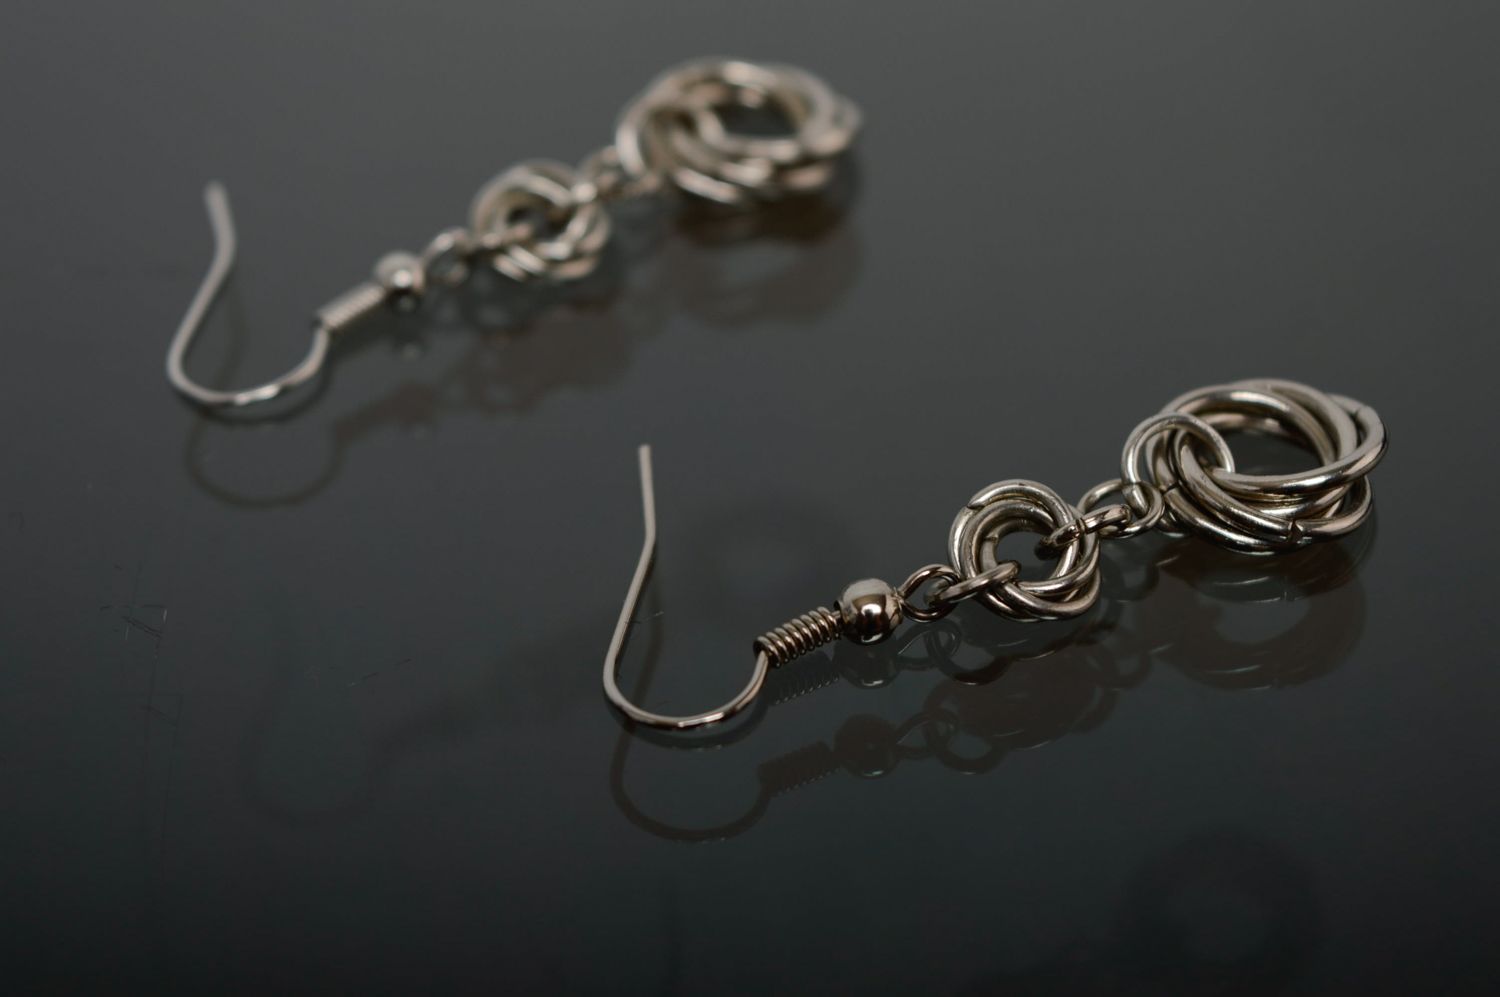 Handmade metal earrings created using chain armor weaving technique photo 4